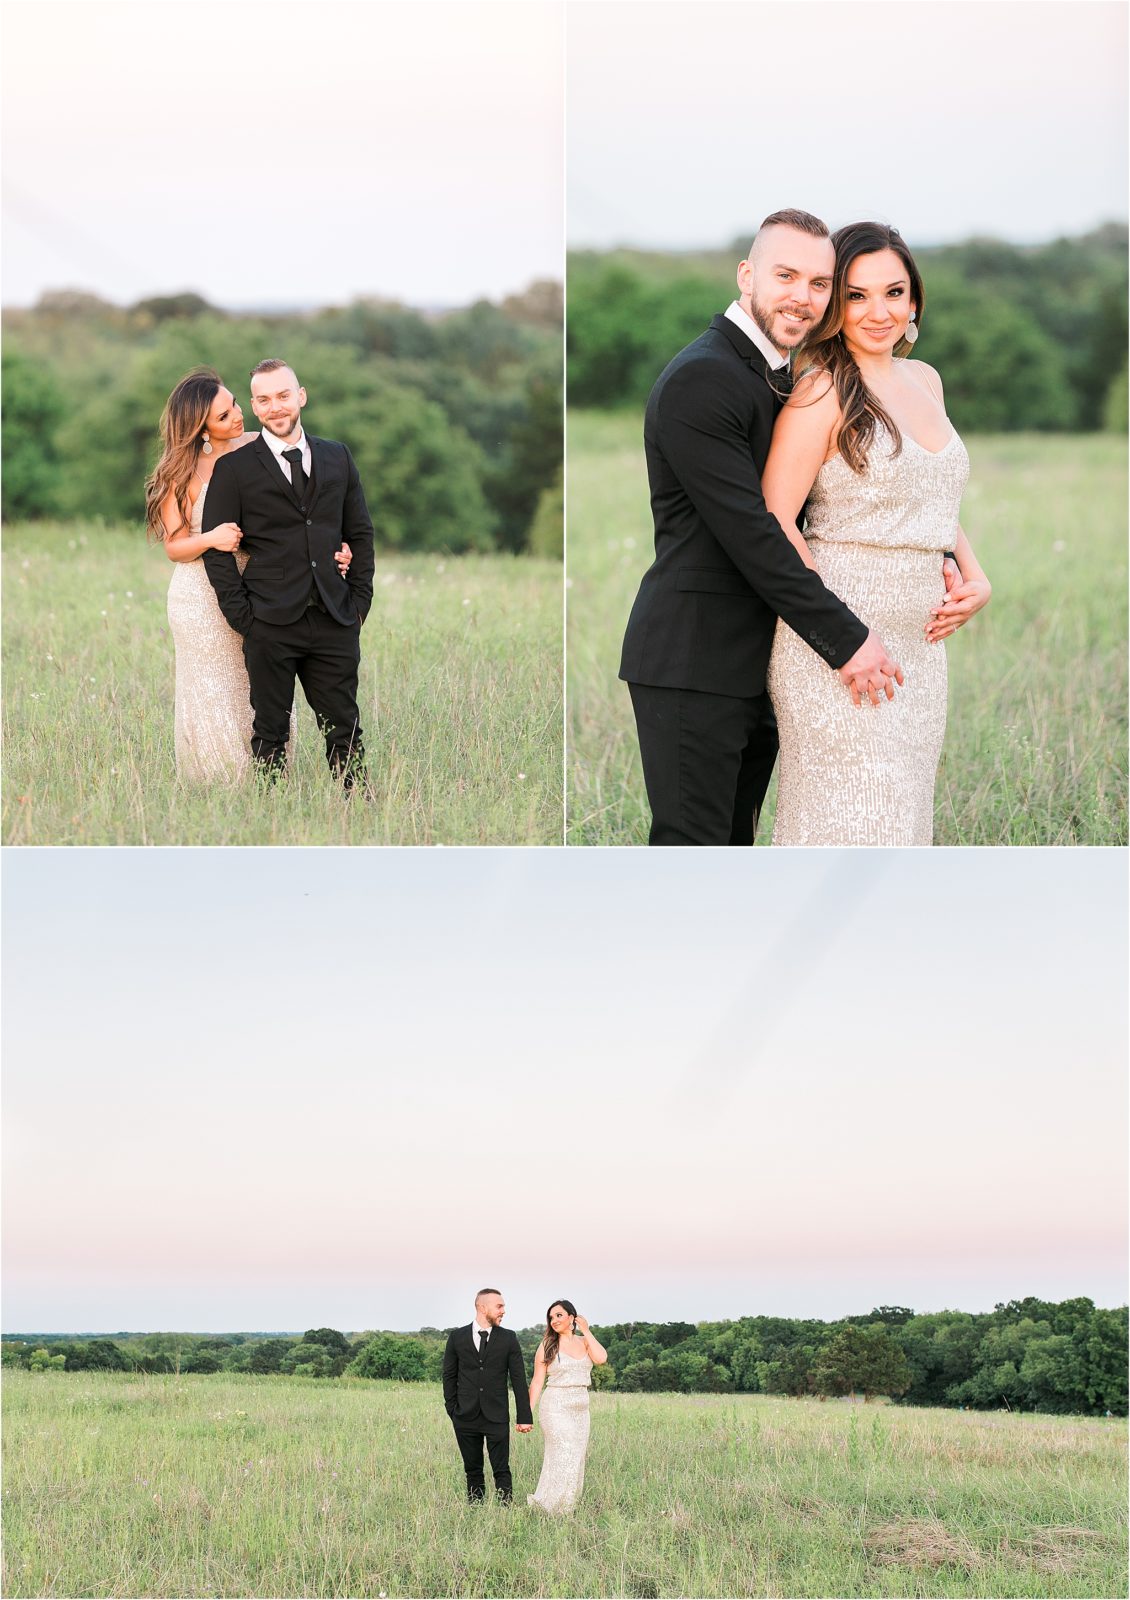 Outdoor DFW Engagement Session by Dallas Wedding Photographer Jillian Hogan Photography